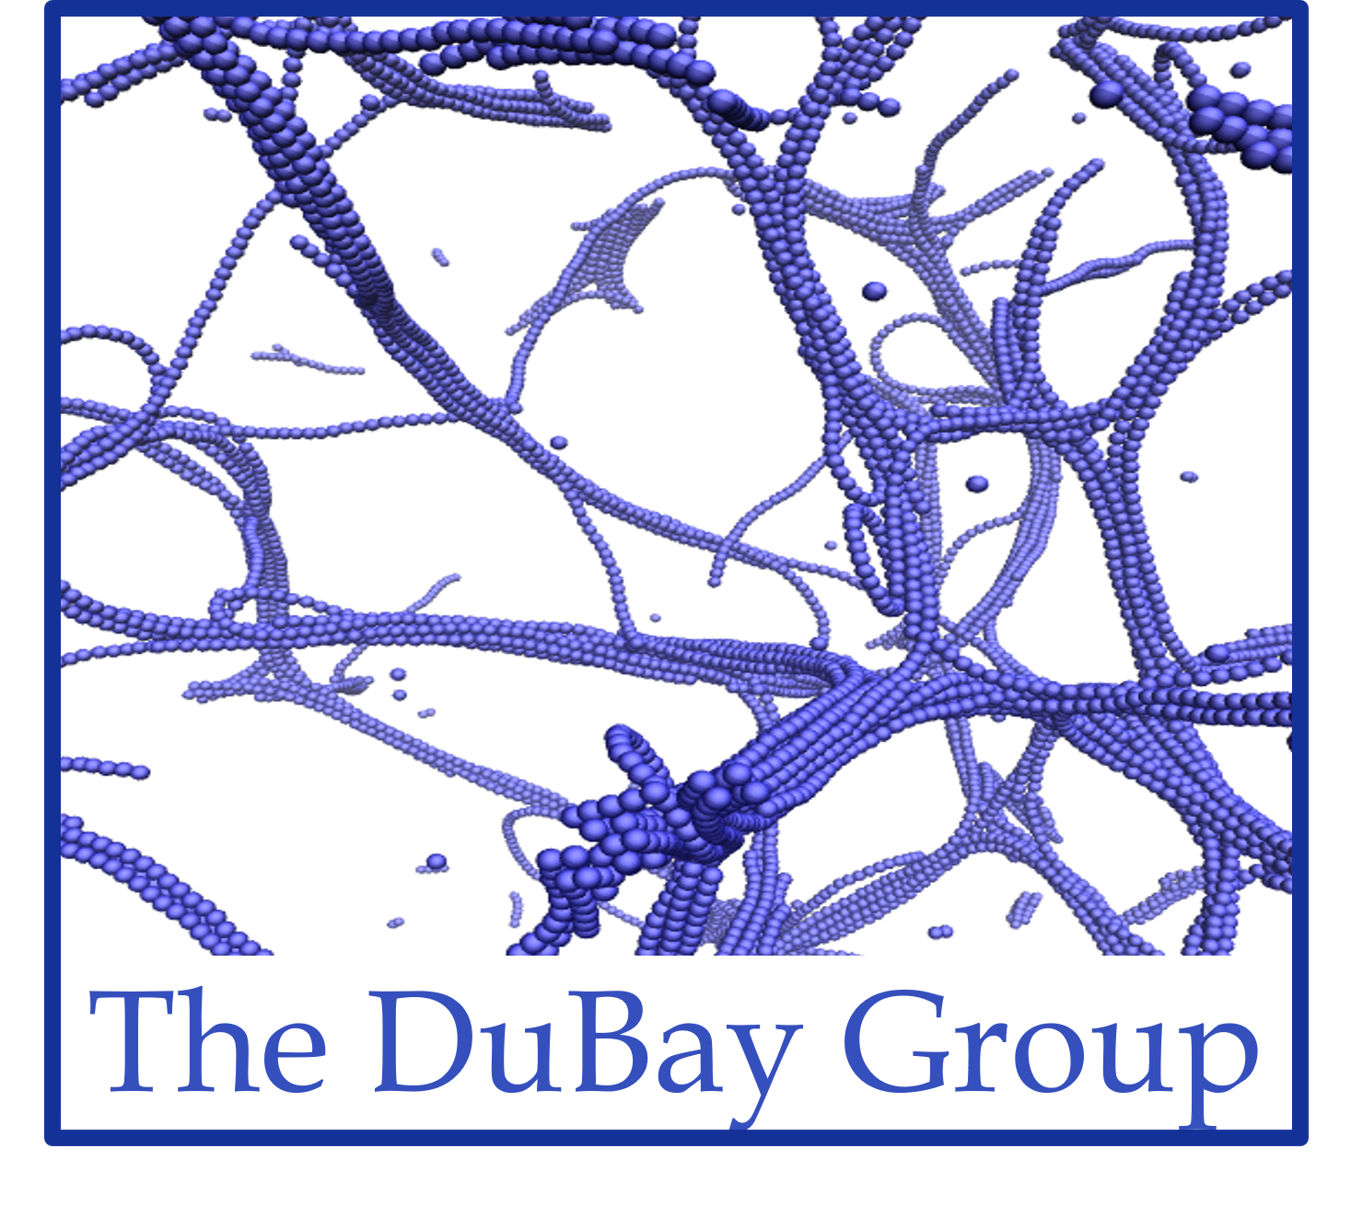 Dubay_group